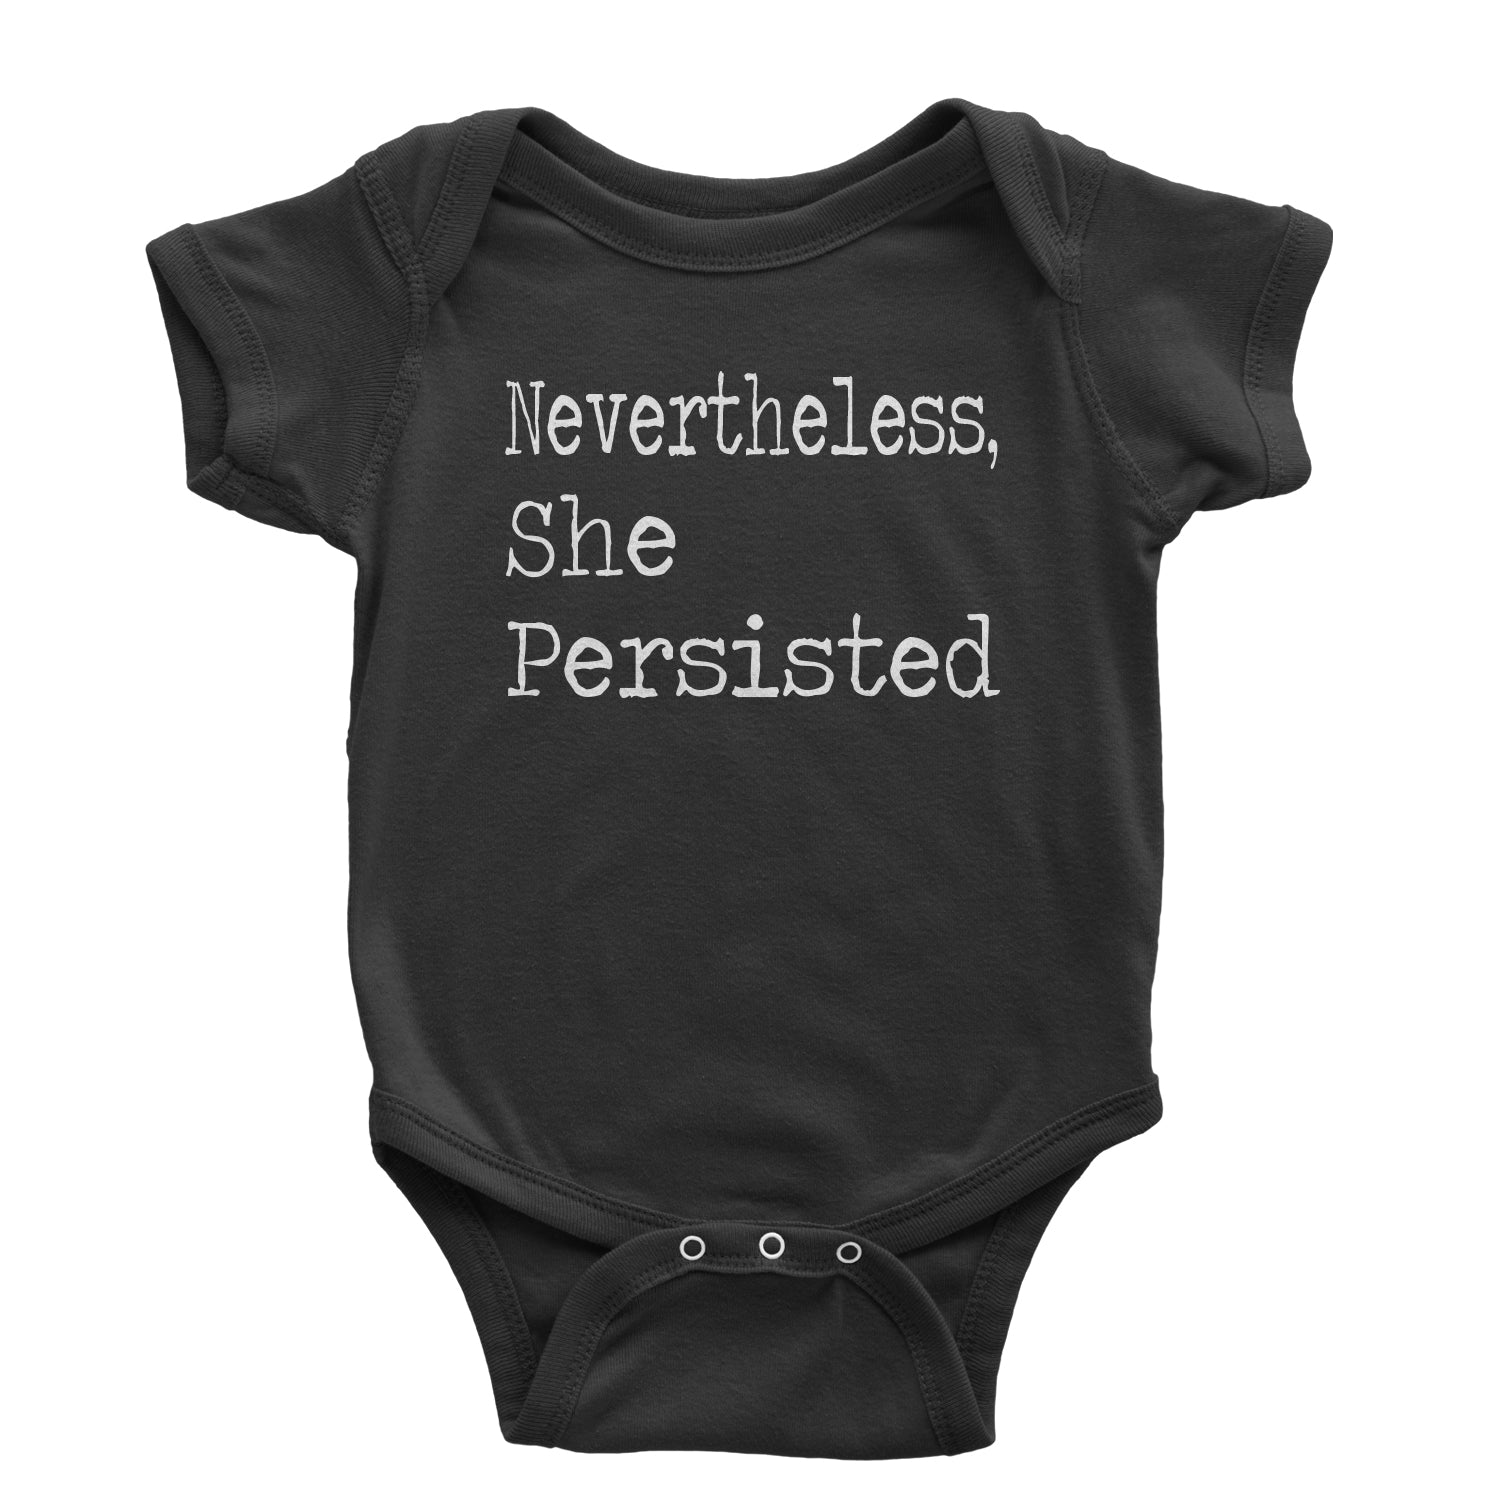 Nevertheless, She Persisted Infant One-Piece Romper Bodysuit 2020, feminism, feminist, kamala, letlizspeak, mamala, mcconnell, mitch, momala, mommala by Expression Tees